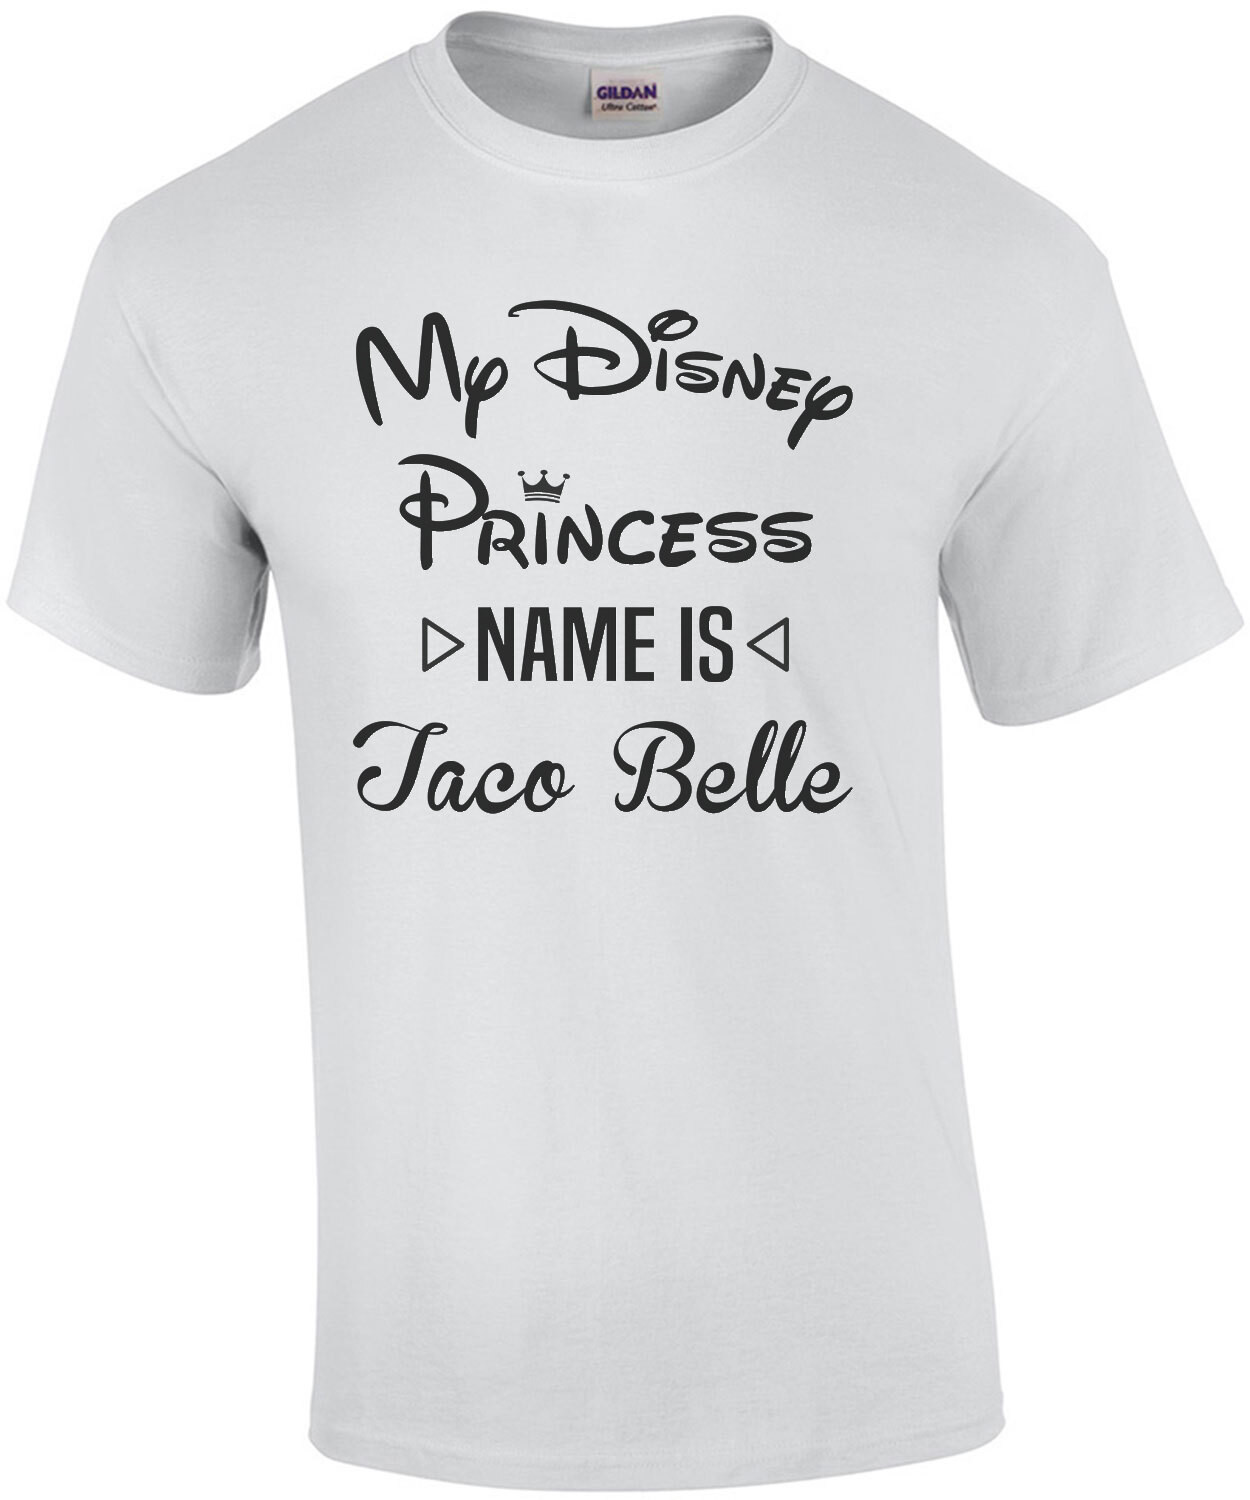 My disney princess name is Taco Belle - Funny disney t-shirt